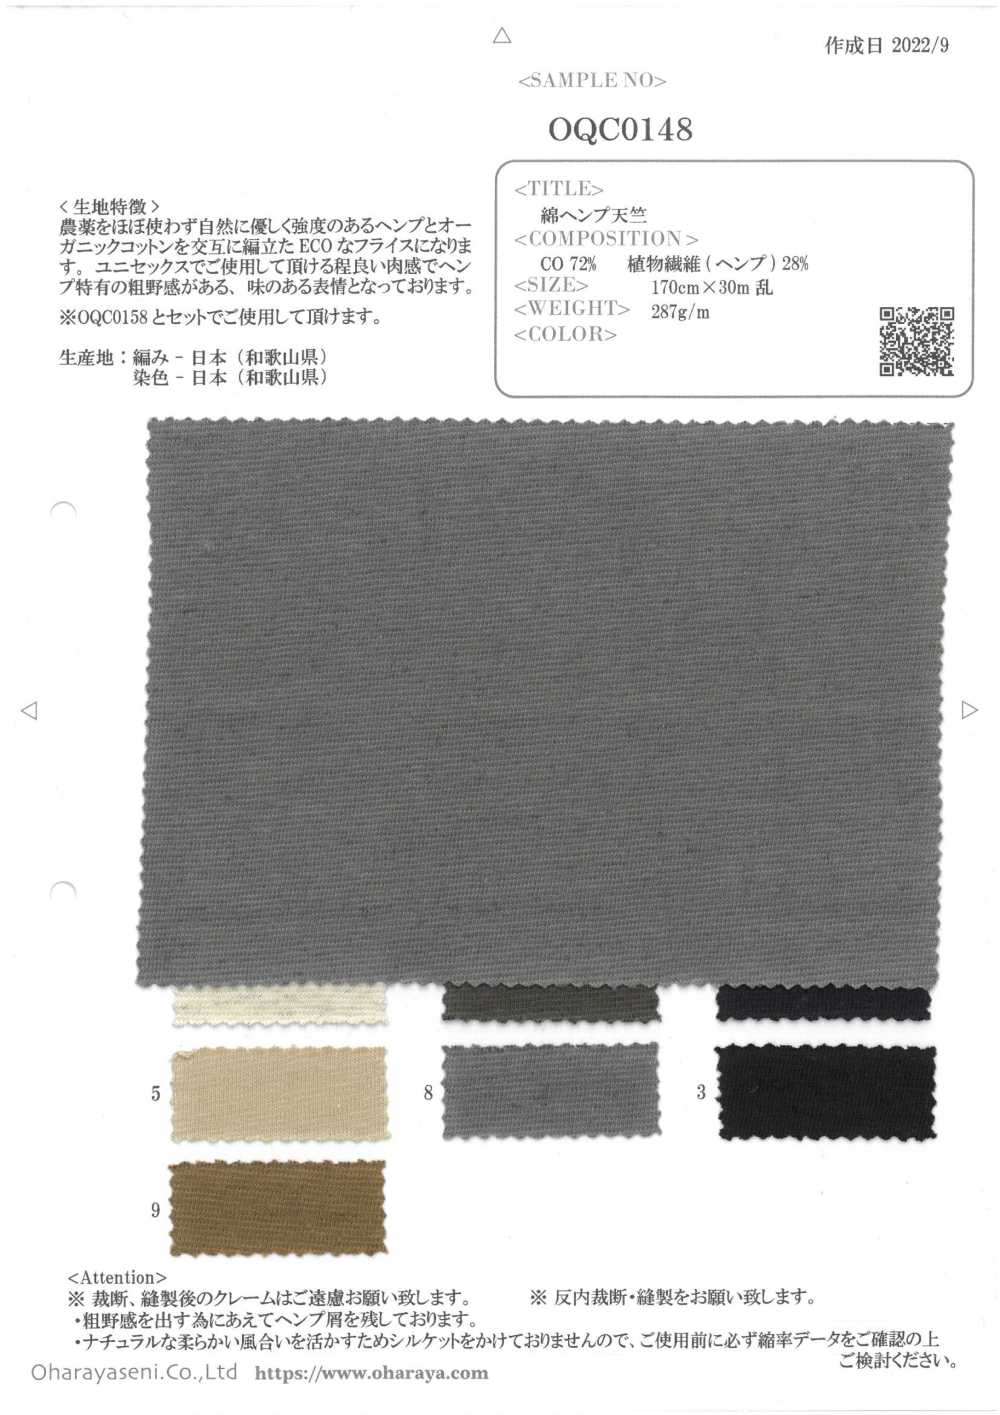 OQC0148 Baumwoll-Hanf-Jersey[Textilgewebe] Oharayaseni